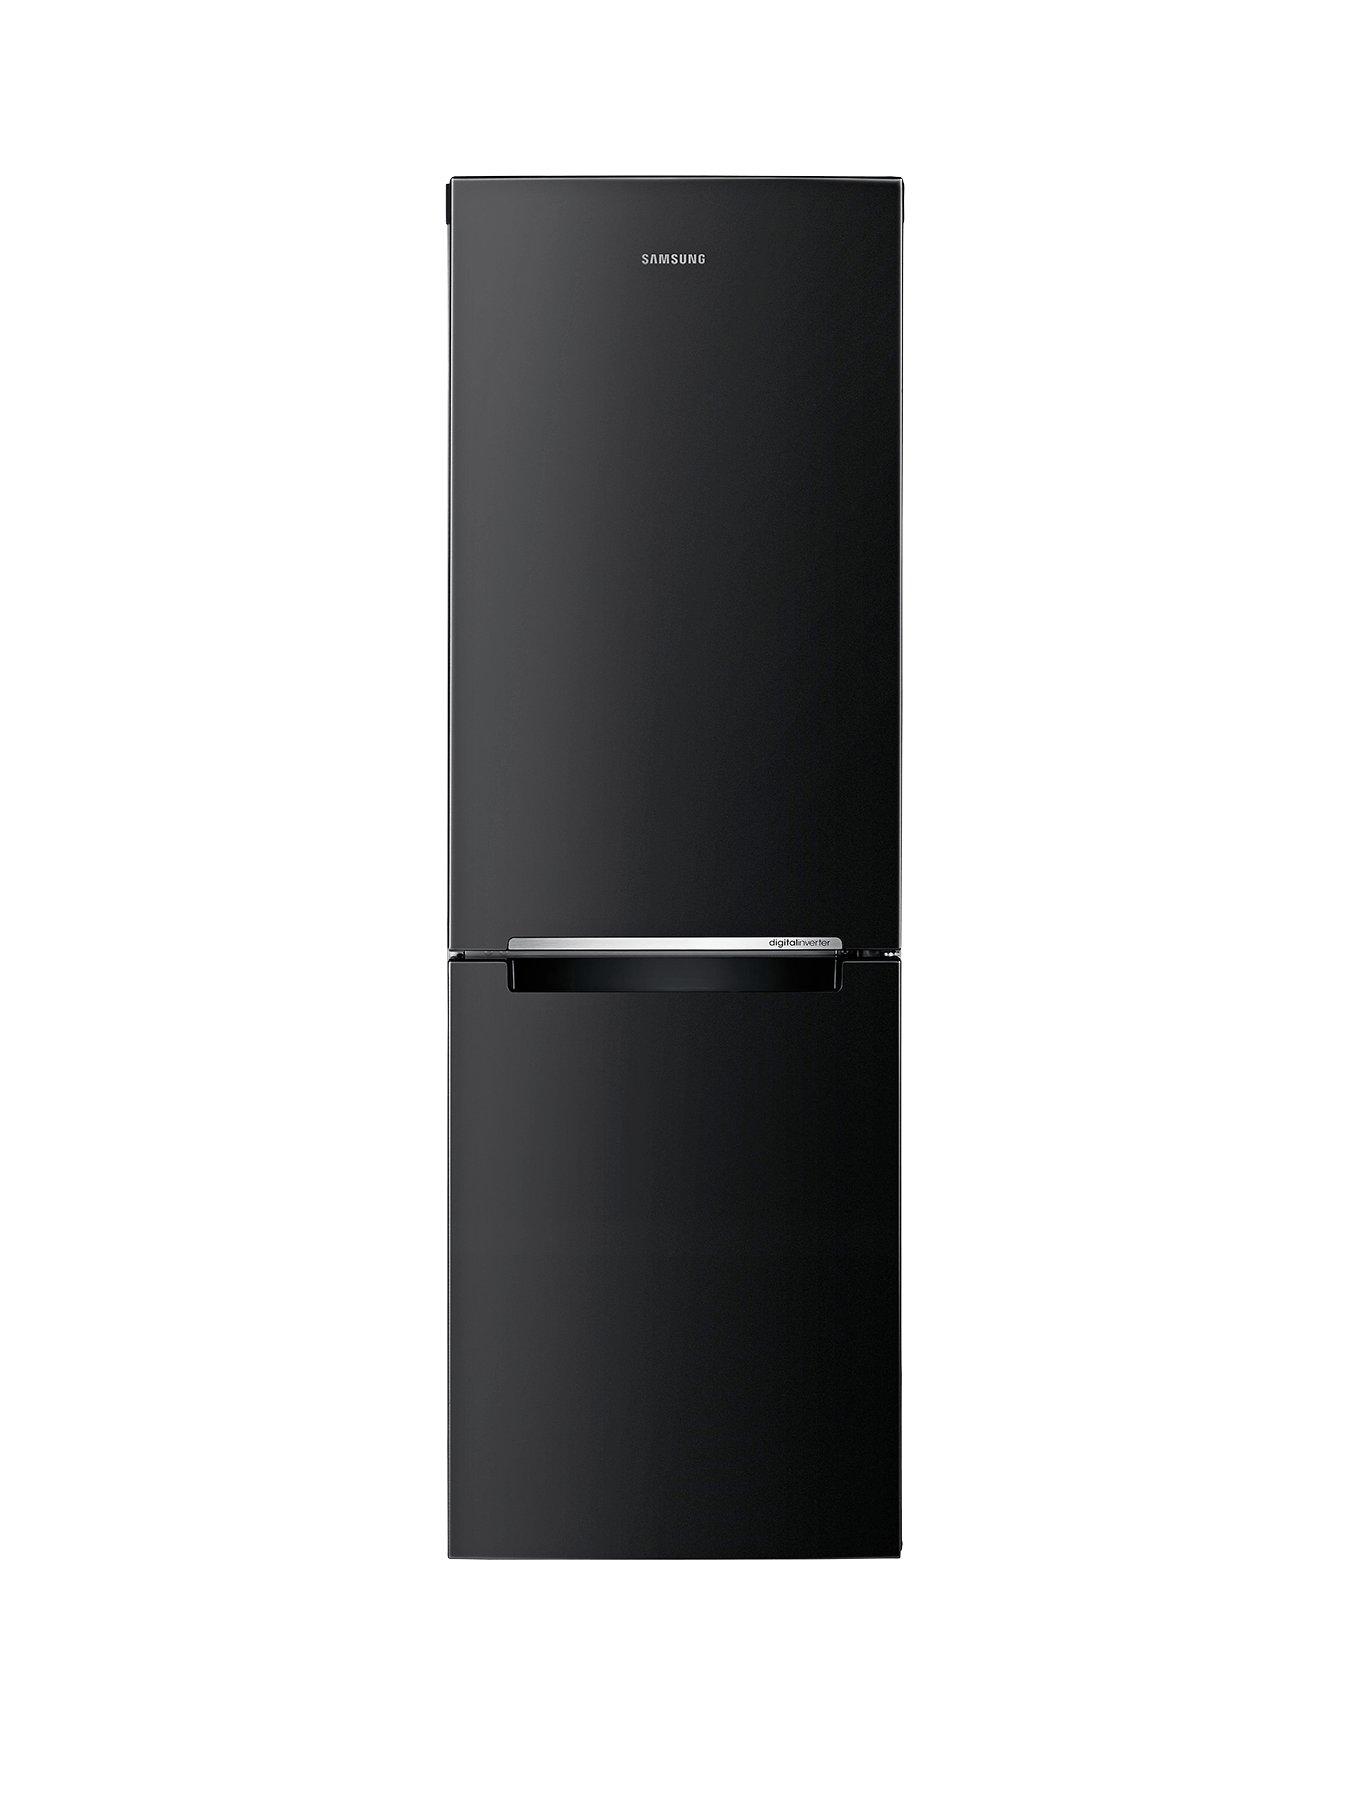 Samsung Rb29Fsrndbc/Eu 60Cm Wide Frost-Free Fridge Freezer With Digital Inverter Technology And 5-Year Samsung Parts And Labour Warranty – Black